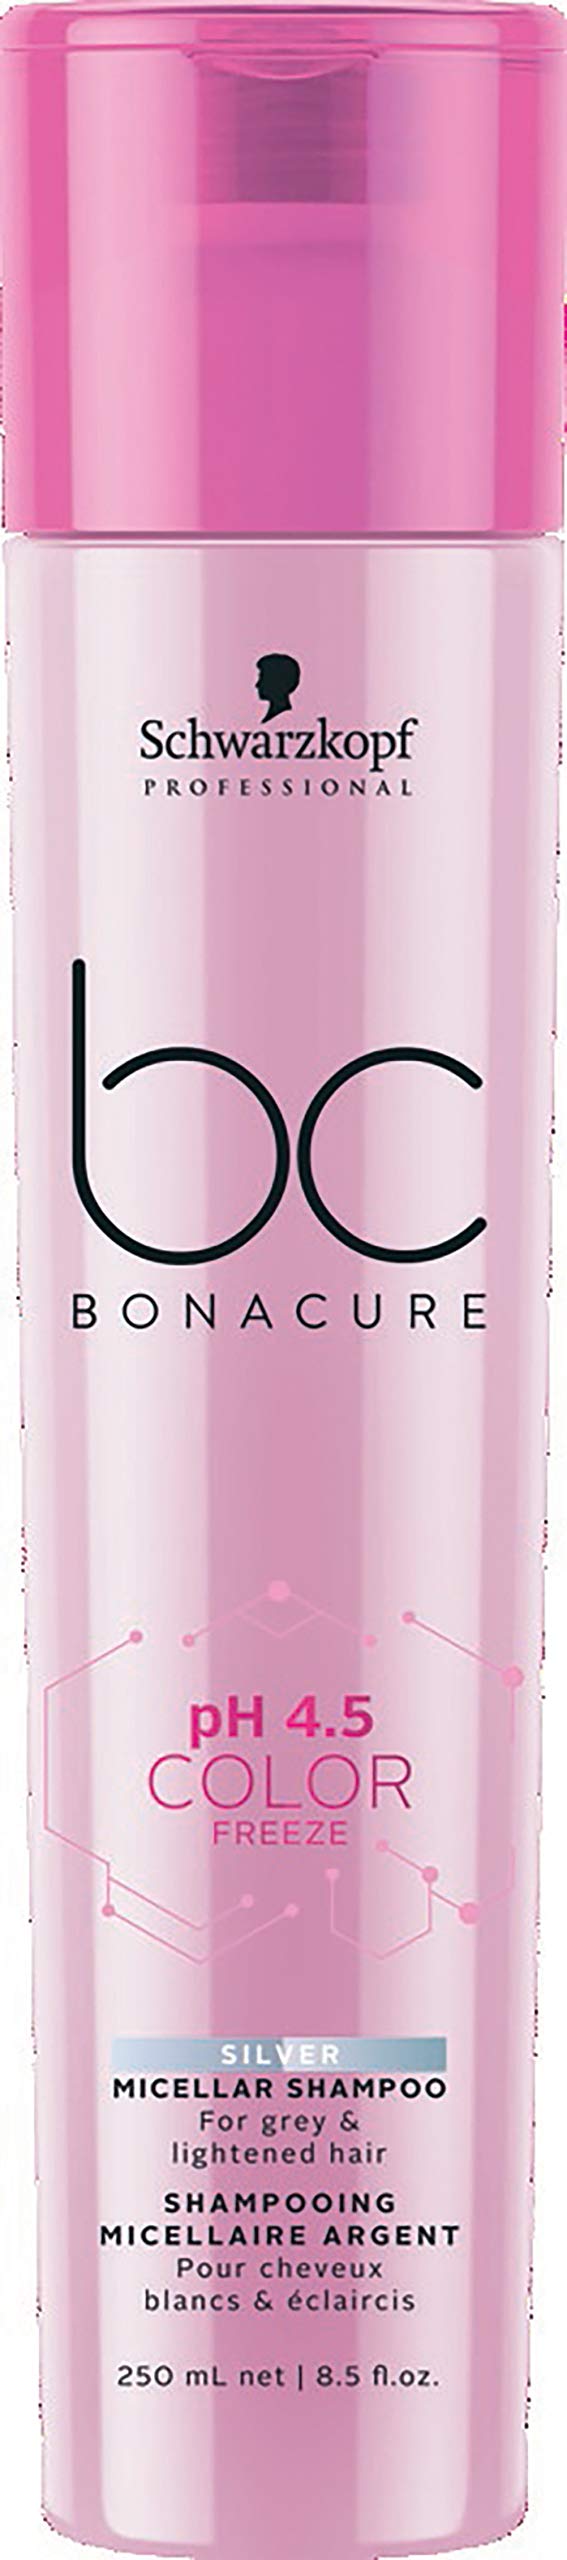 Bonacure ph 4,5 Color Freeze silver shampoo 250 ml